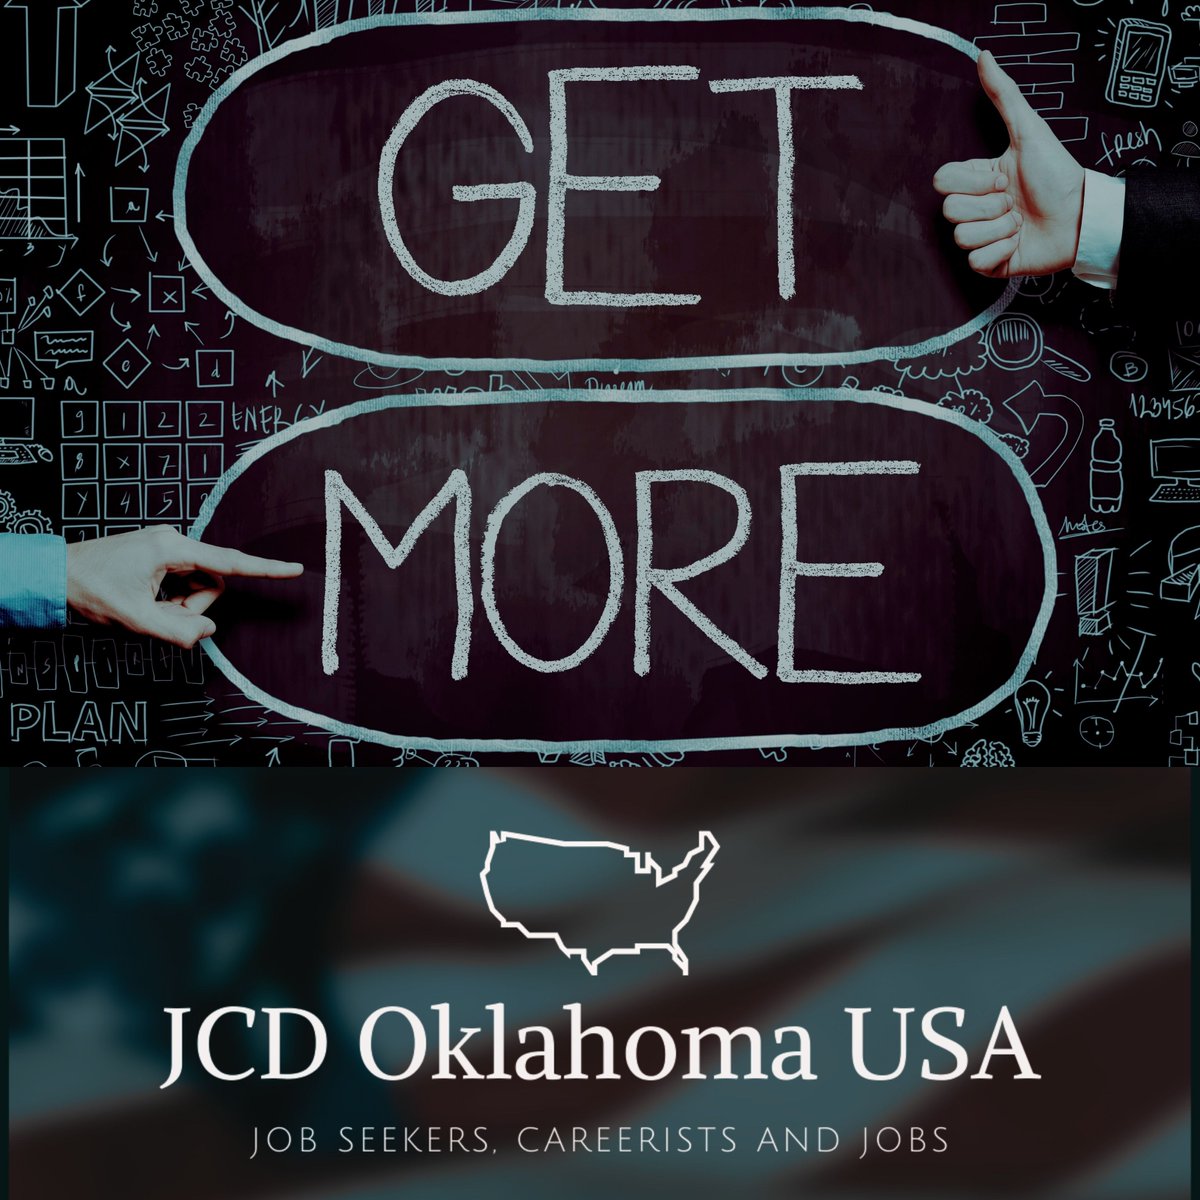 Looking for #jobs or #hiring #Talent in #Oklahoma? GO HERE linkedin.com/groups/7463453/

#oklahoma #oklahomajobs #oklahomacity #tulsa #tulsajobs #shawneeok #normanok #stillwaterok #edmondok #guthrieok #adaok #bethanyok #blanchardok #brokenarrowok #midwestcity #alvaok #usa #LinkedIn